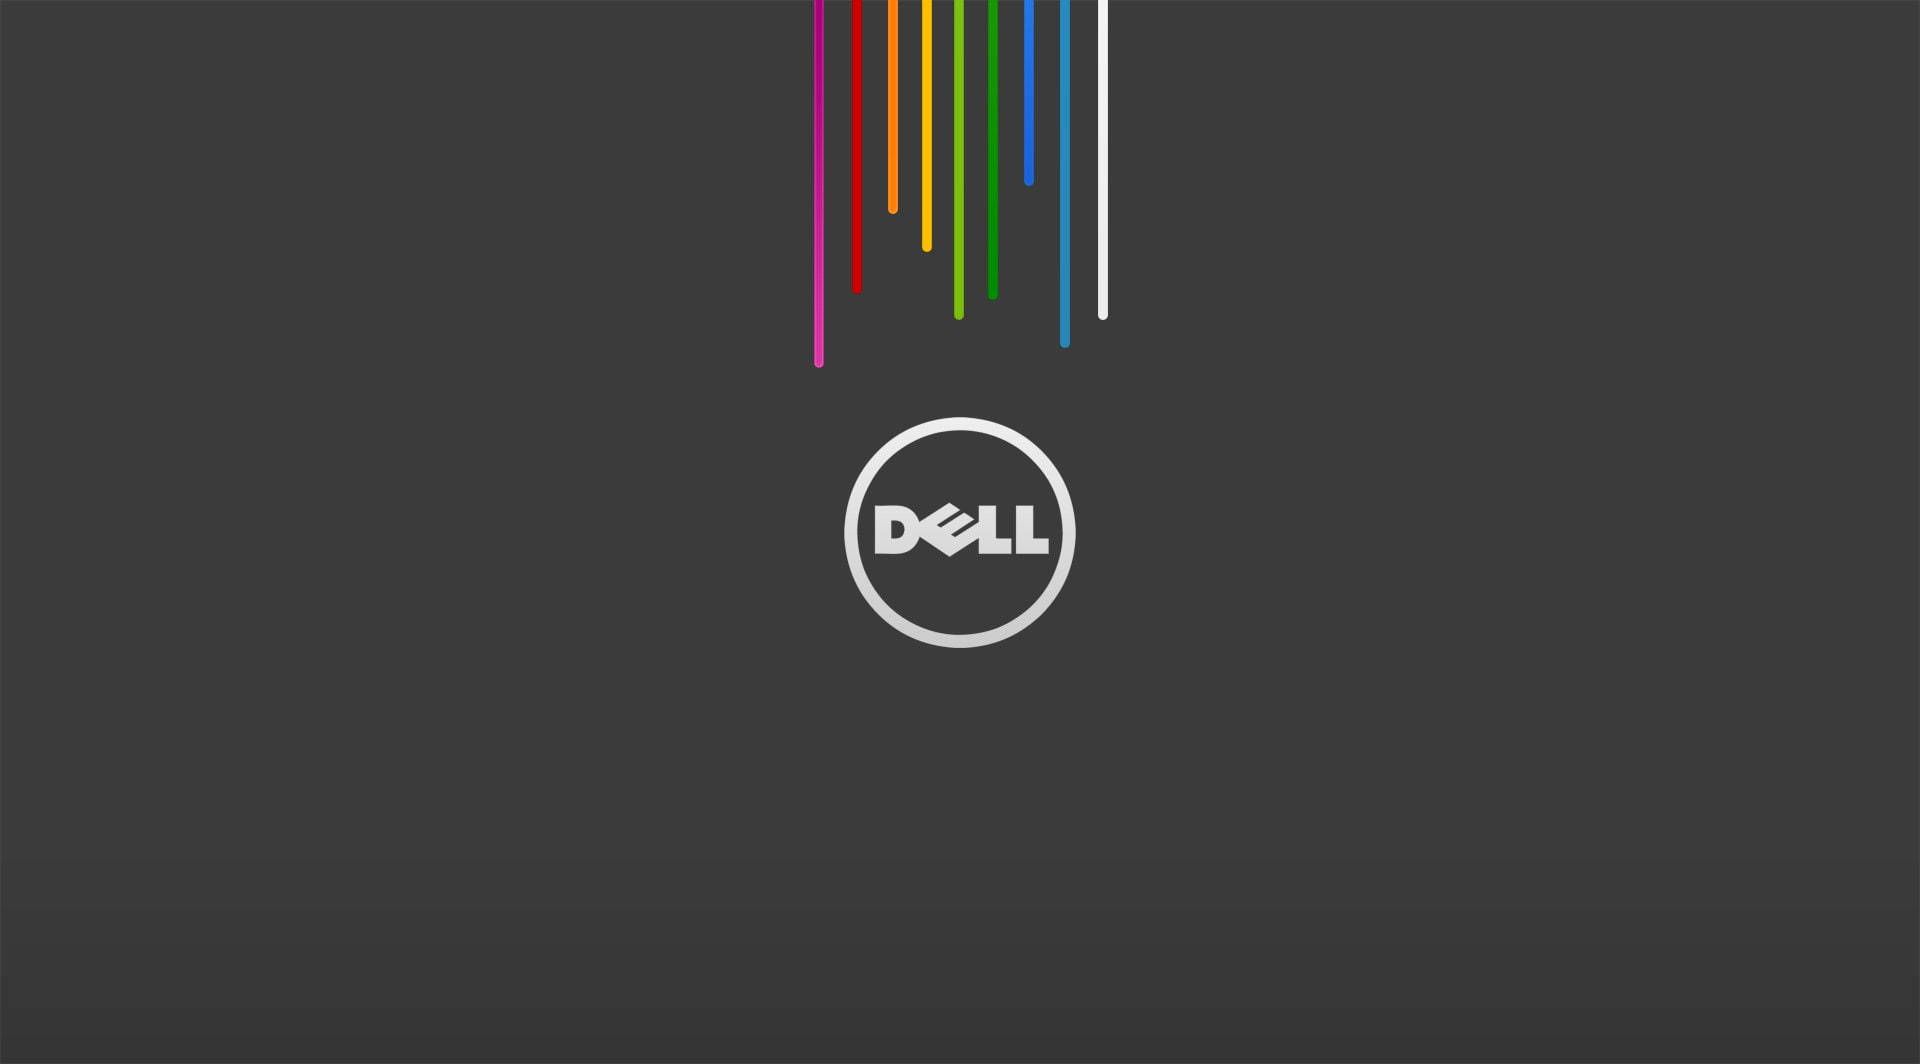 Dell Laptop Falling Colors Wallpaper